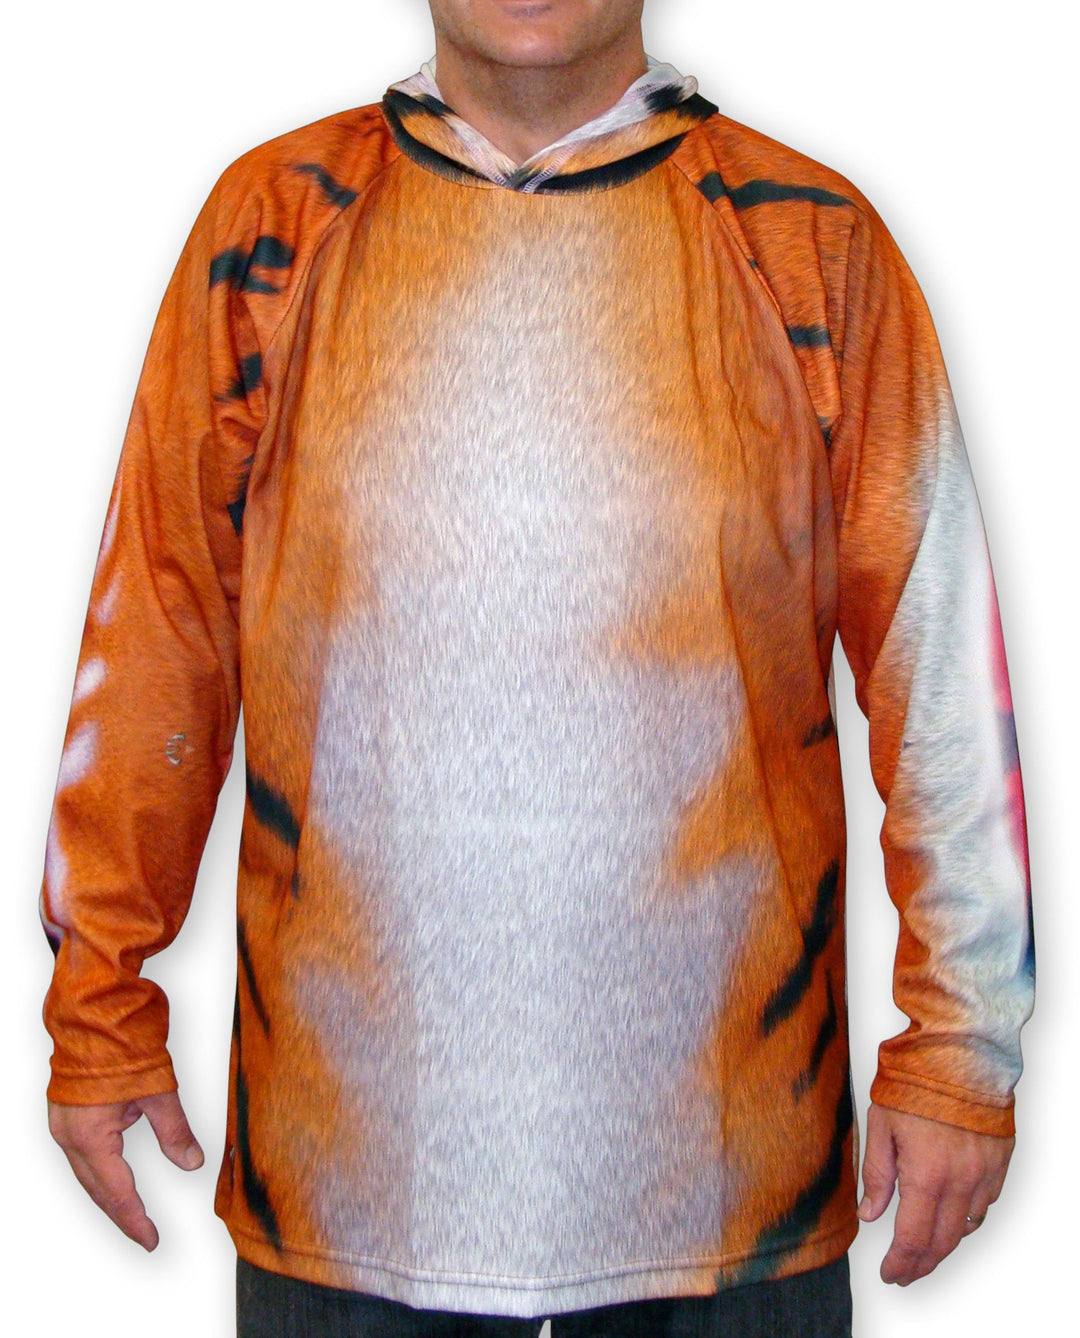 BENGAL TIGER Hoodie Chomp Shirt by MOUTHMAN®